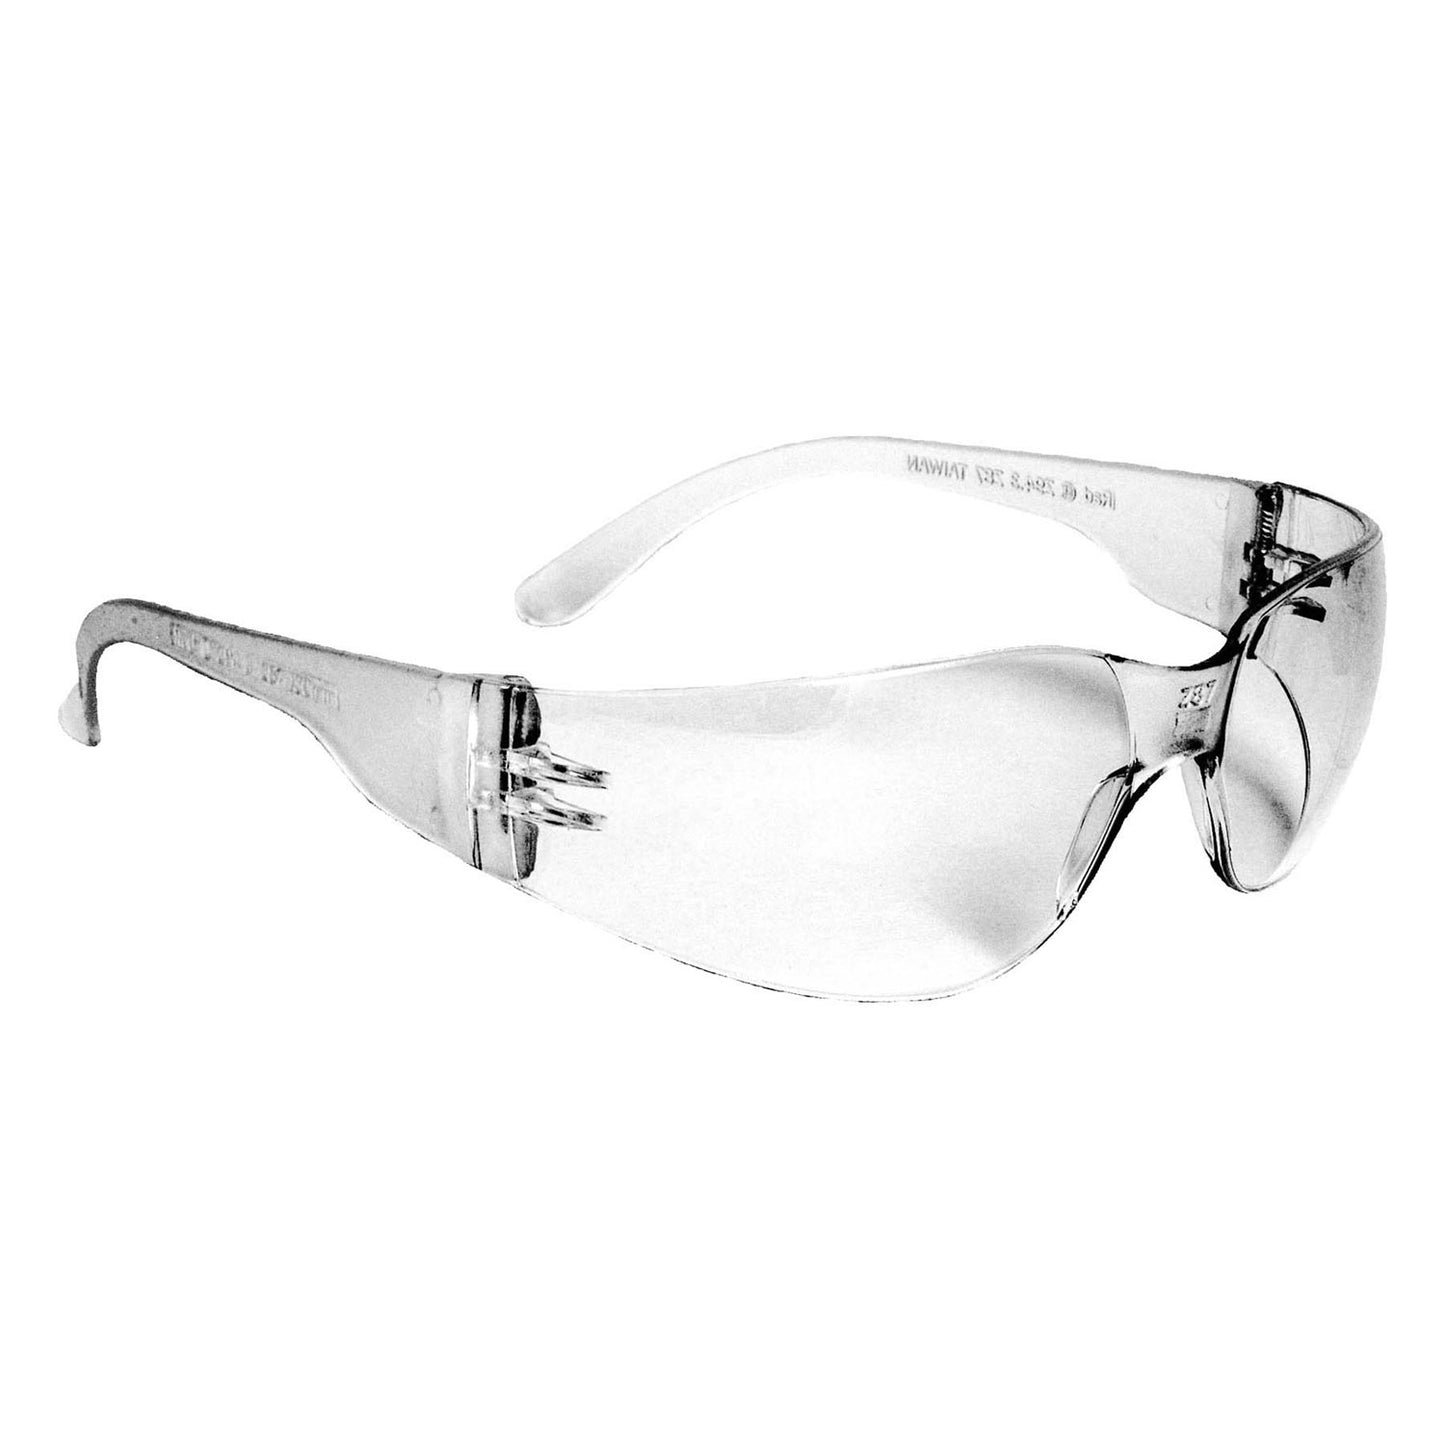 Radians Mirage Safety Eyewear